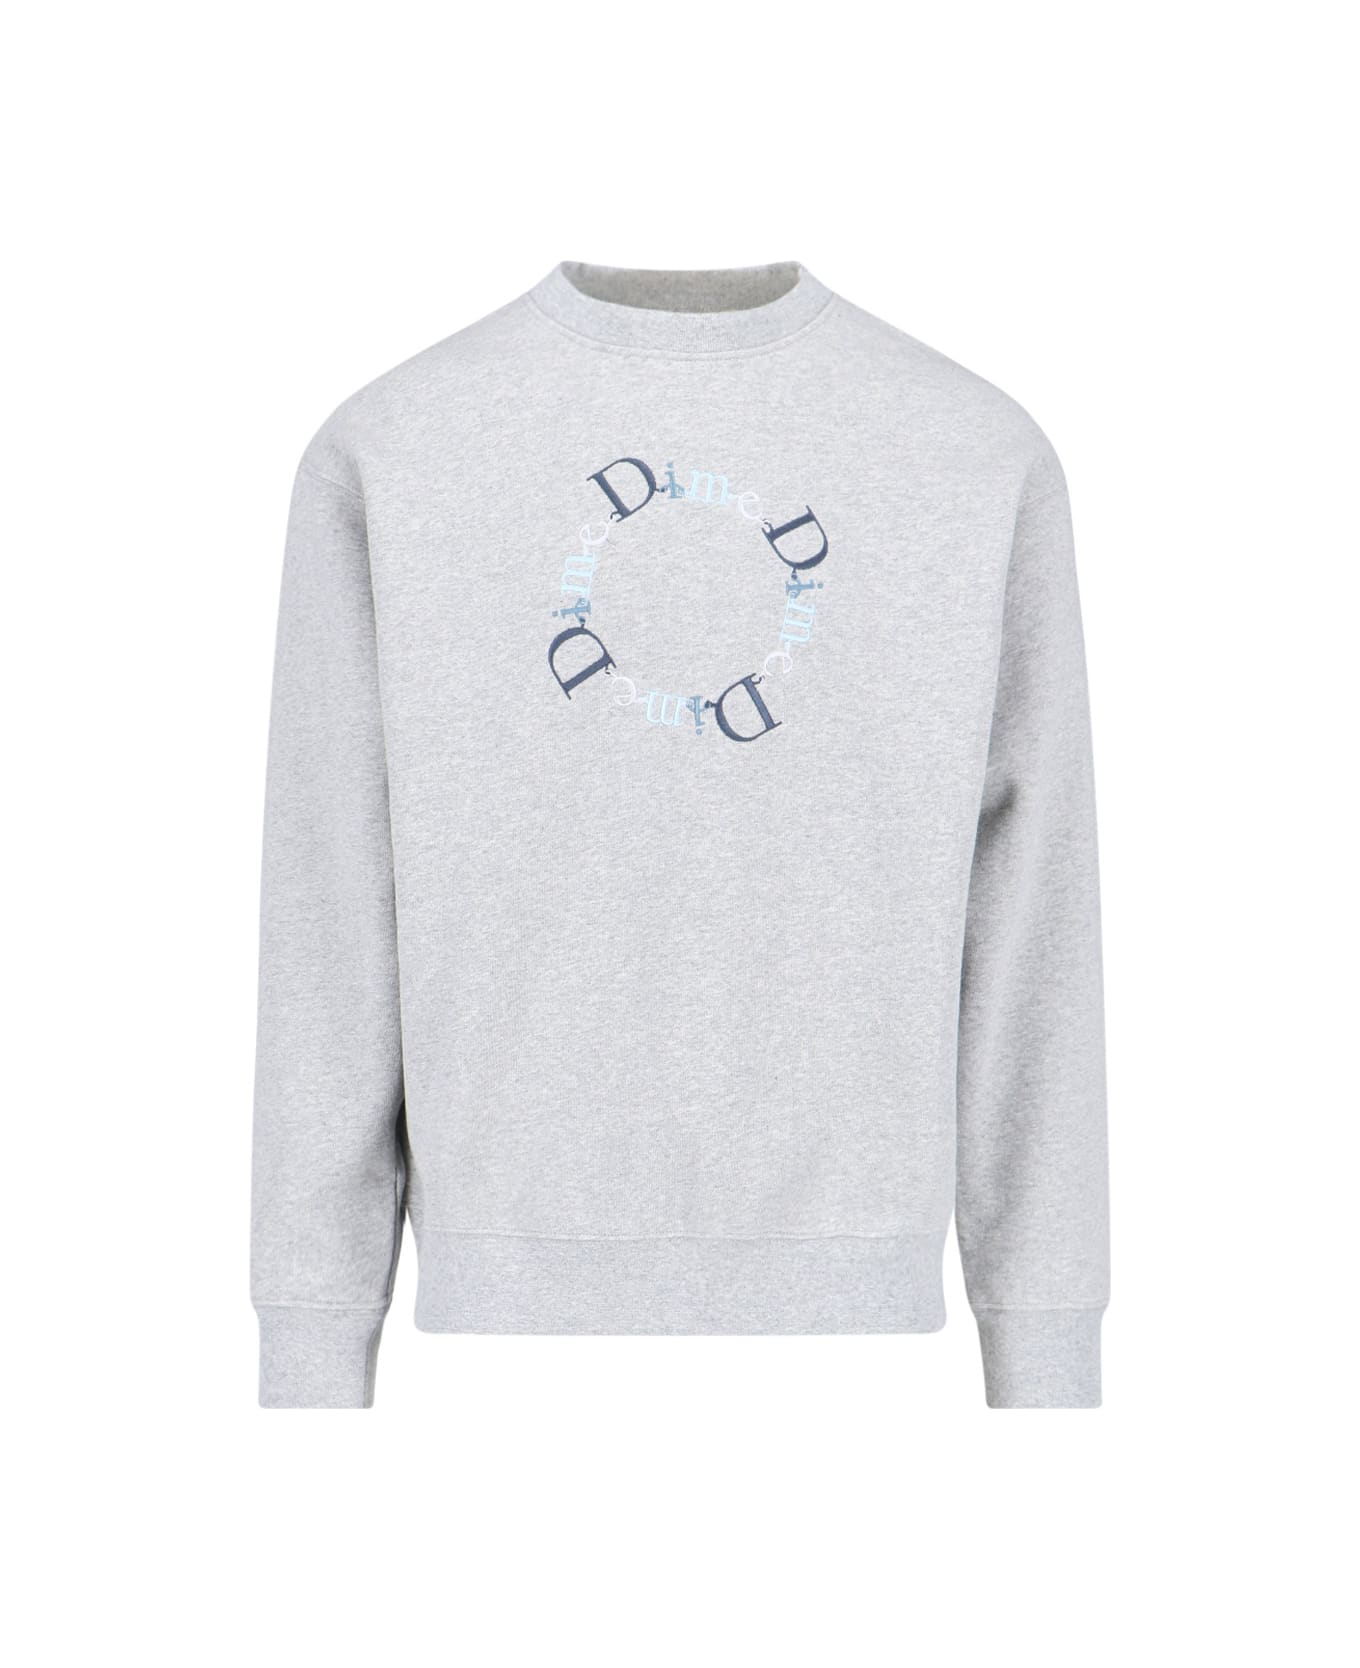 Dime 'bff' Sweatshirt - Gray